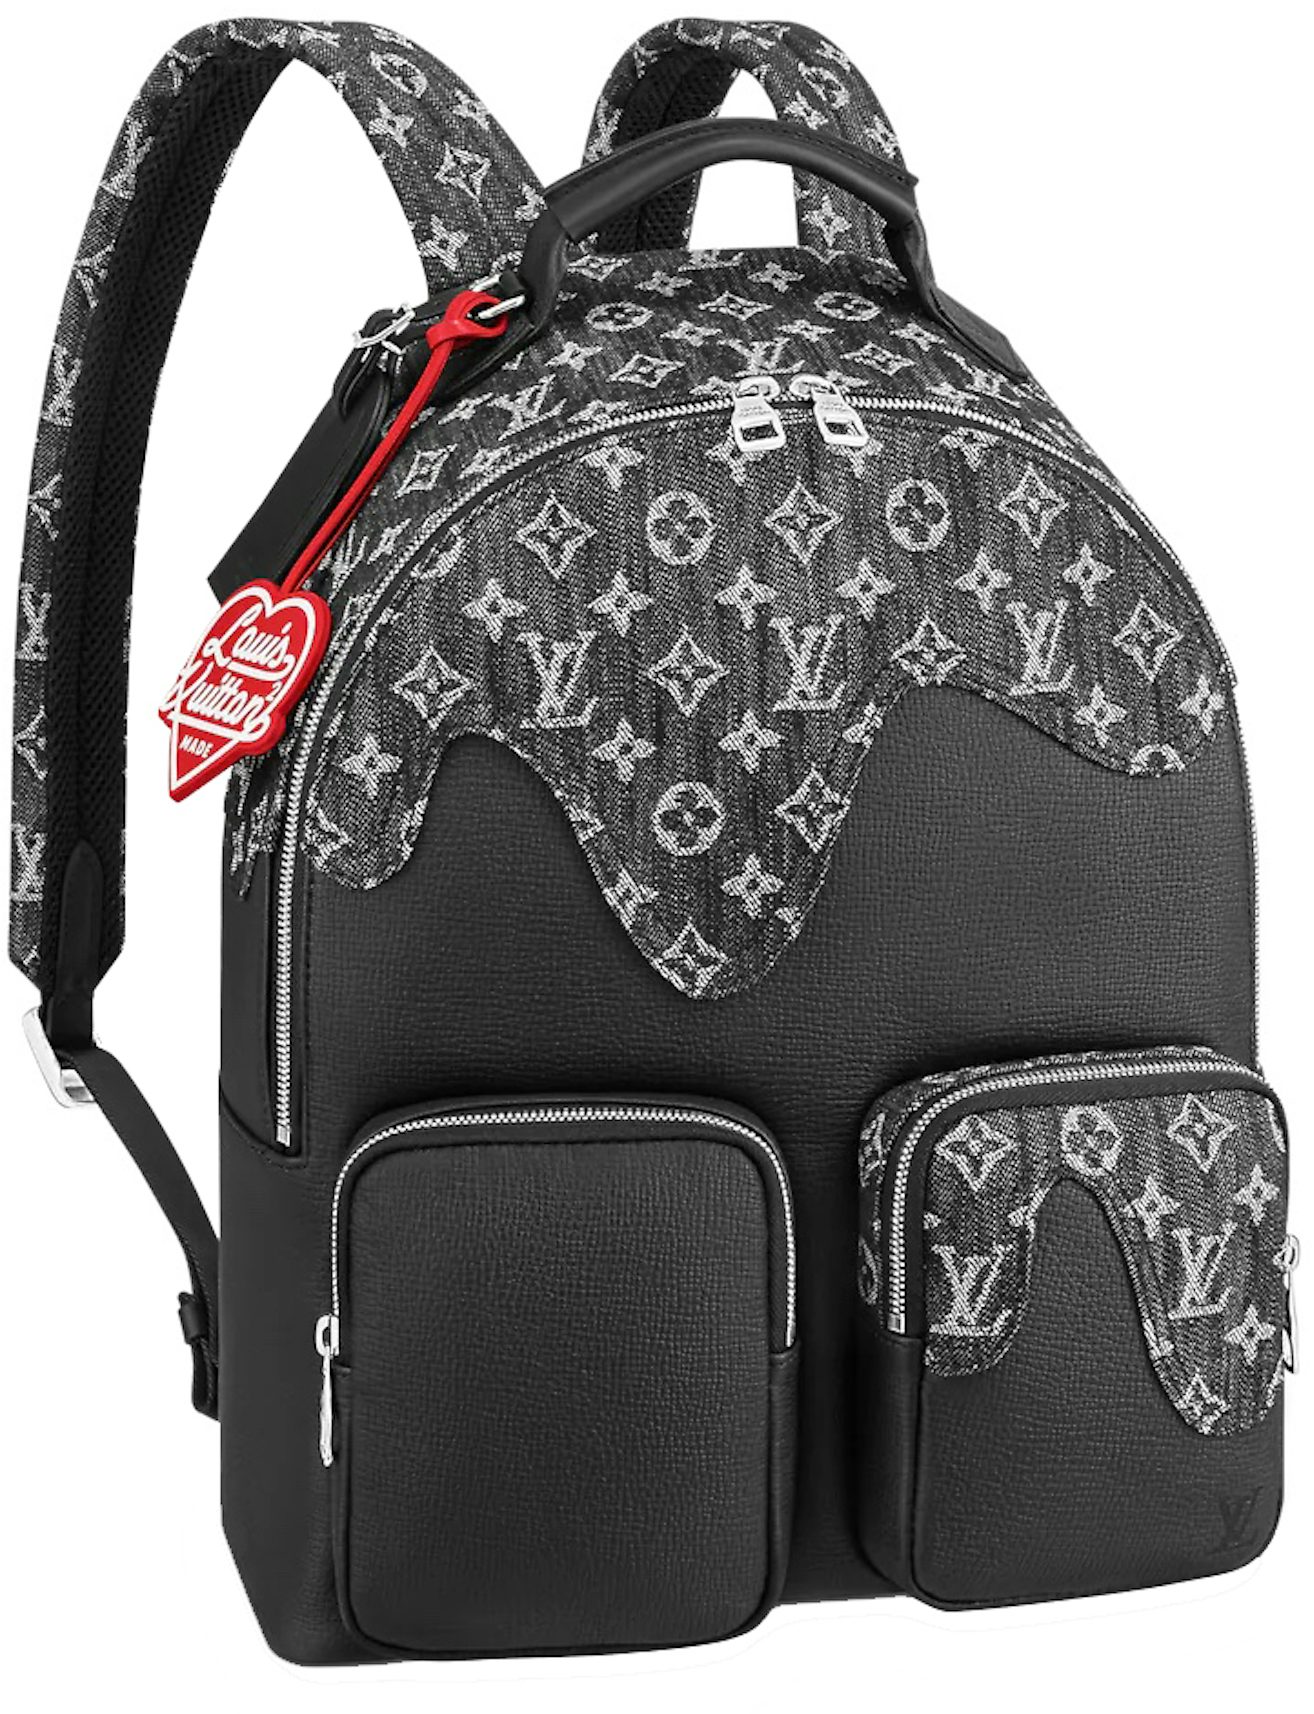 LV x NBA Monogram New Backpack w/ Tags